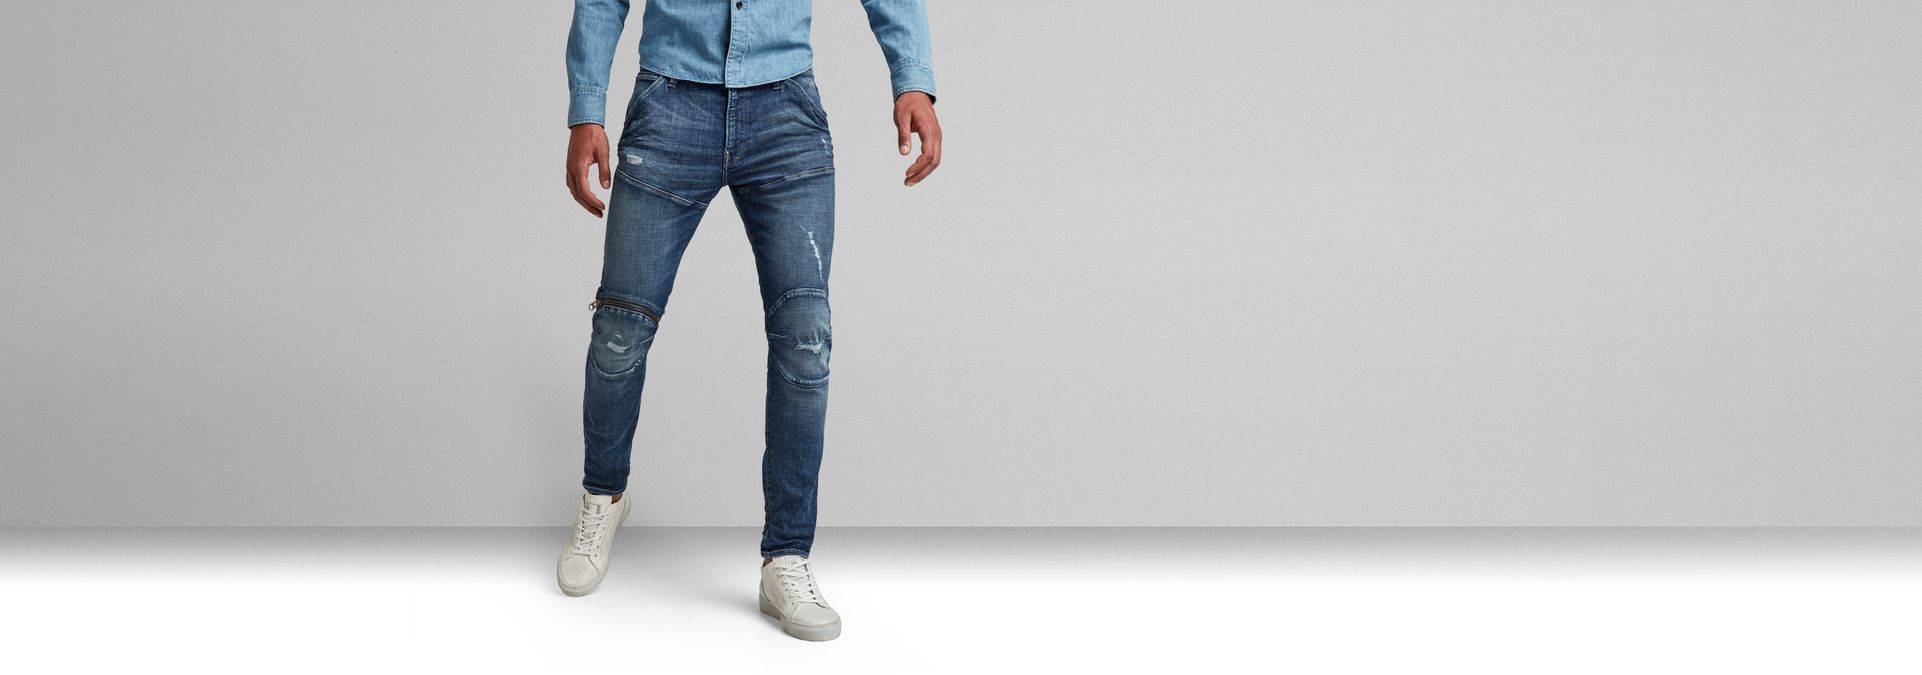 Jeans 5620 3D Zip Knee Skinny Vaqueros G-Star RAW de Denim de color Azul para hombre Hombre Ropa de Vaqueros de Vaqueros skinny 